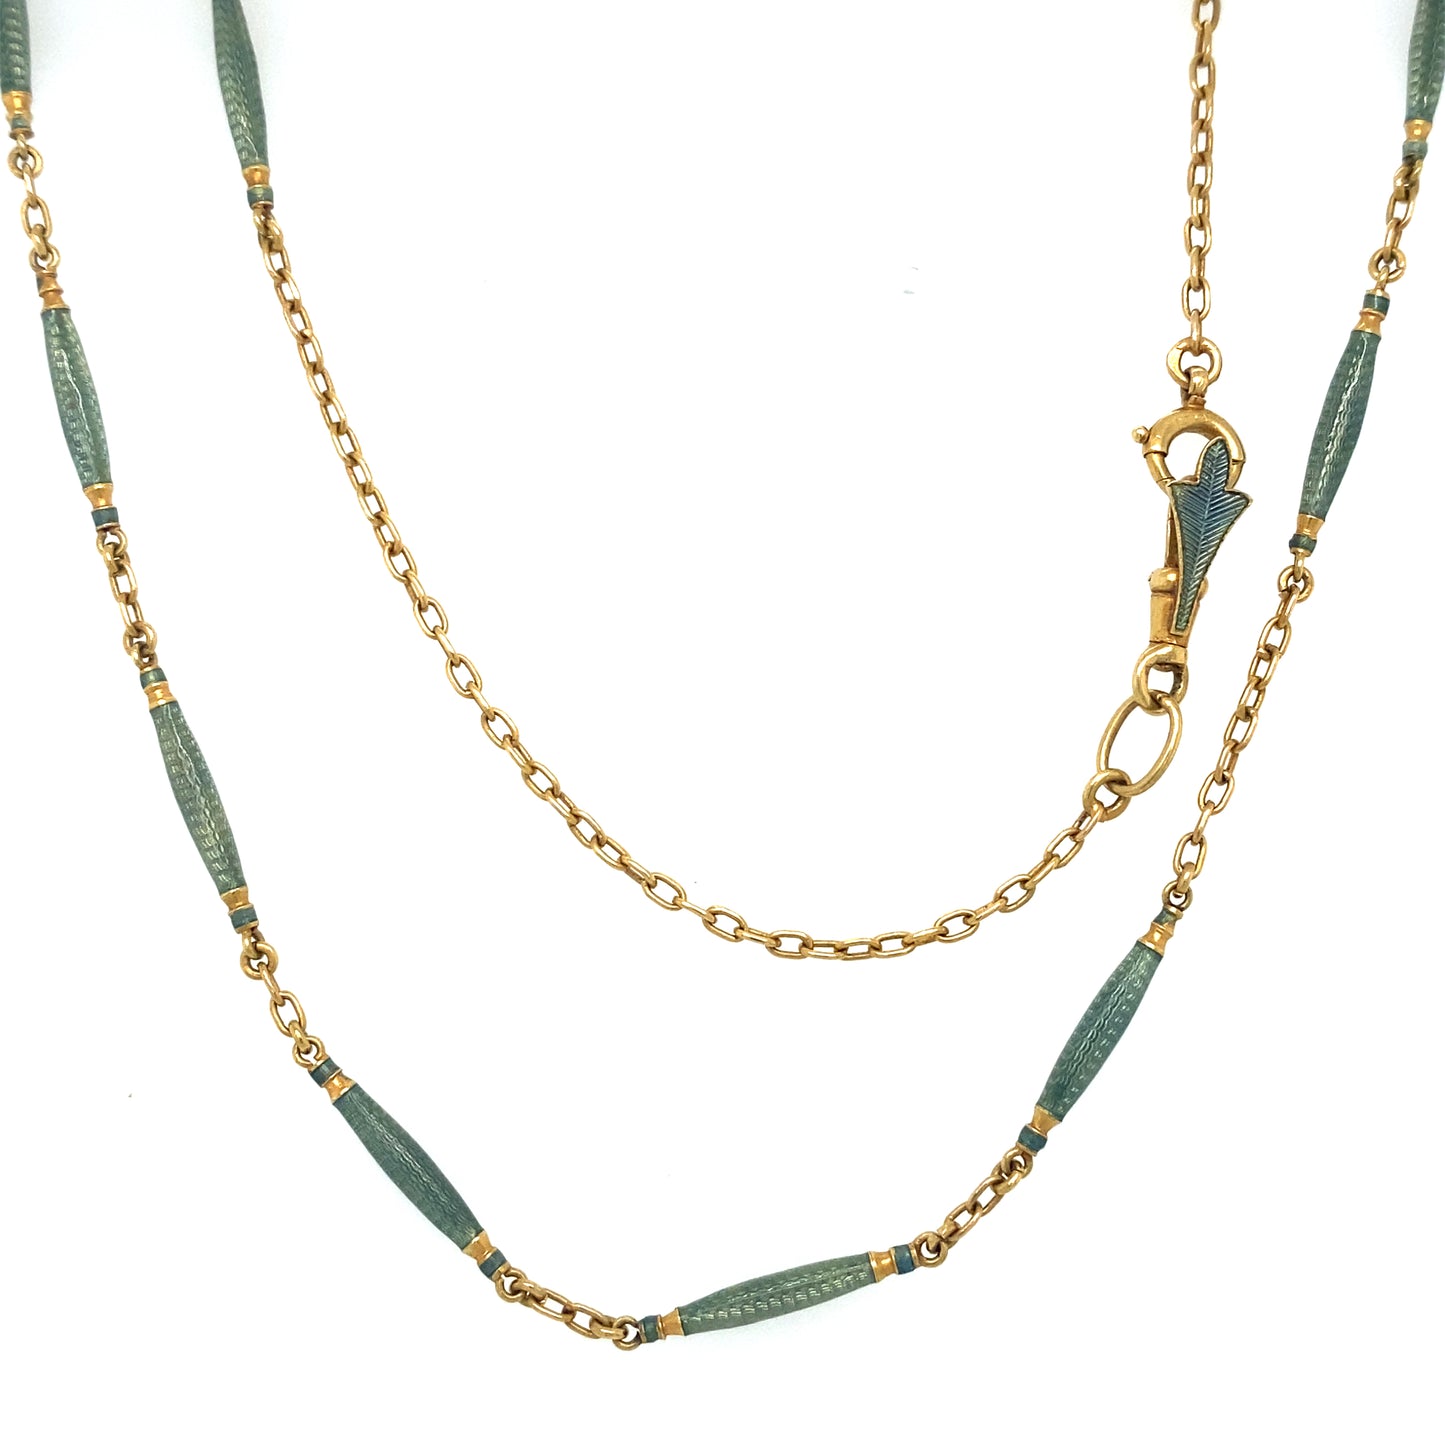 Circa 1890s Wilhelm Müller Guilloche Enamel Chain Necklace in 18K Gold